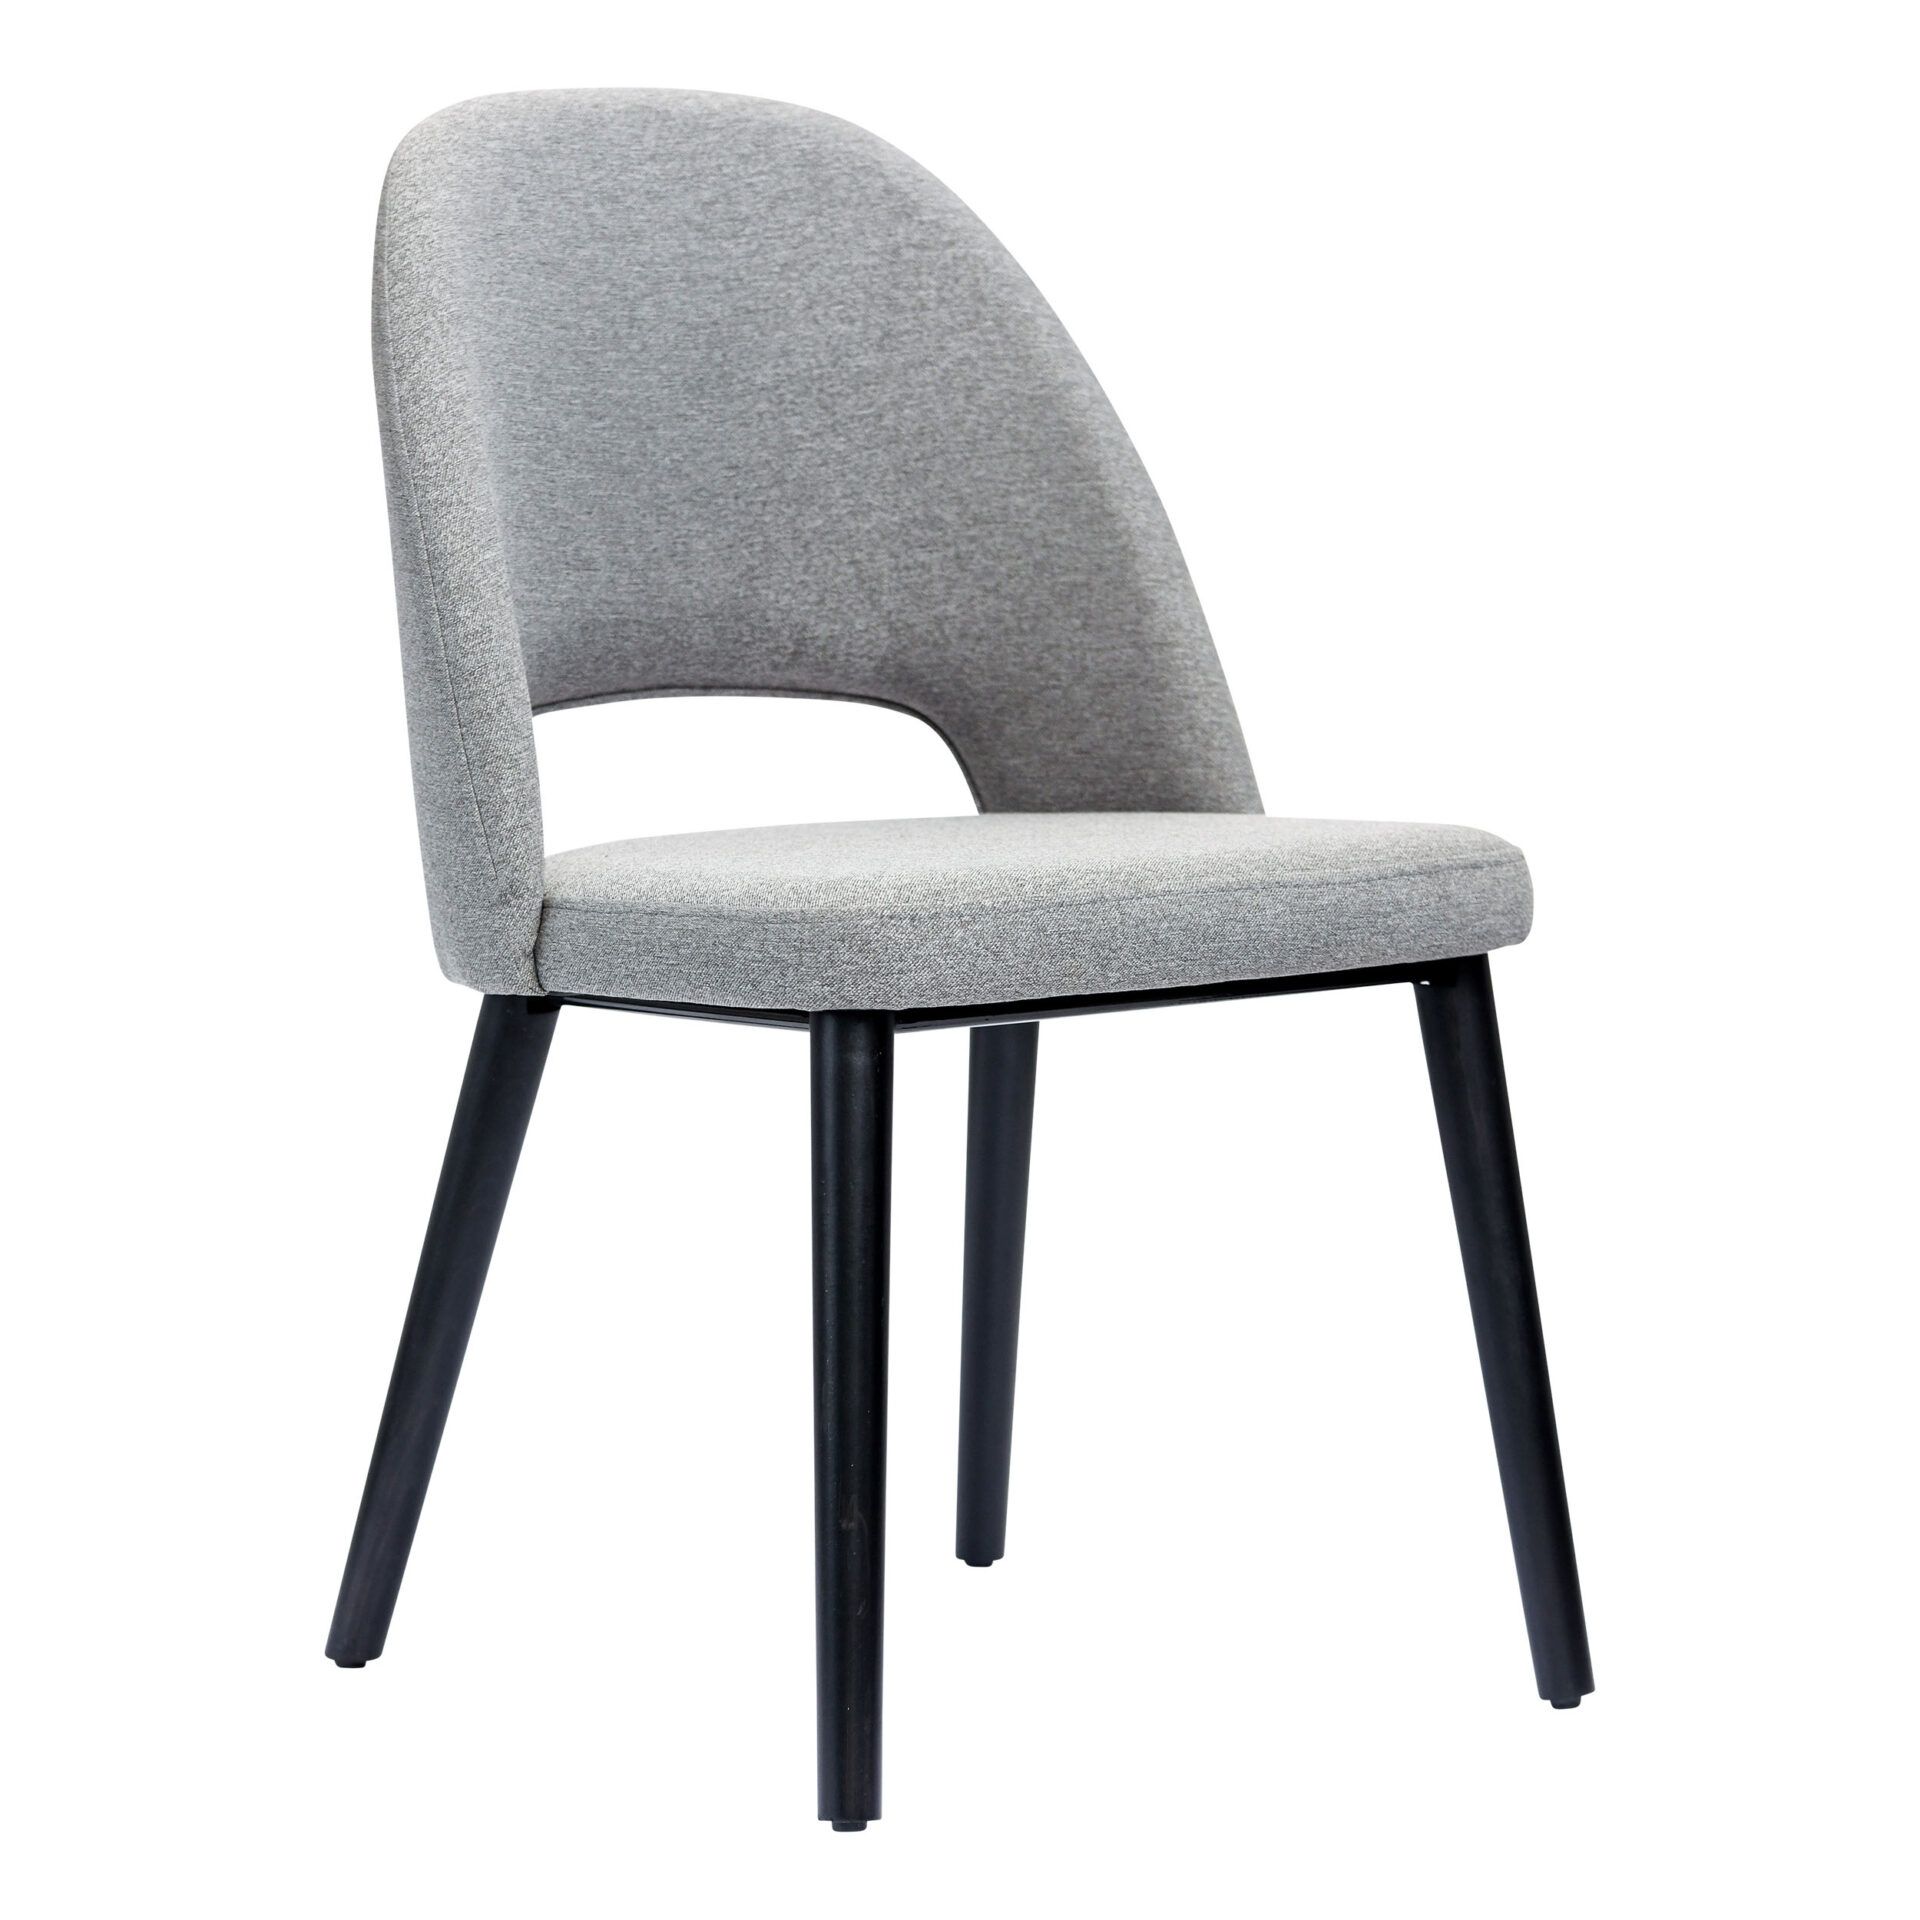 Semifreddo Chair - Black Legs/Taupe Woven Fabric